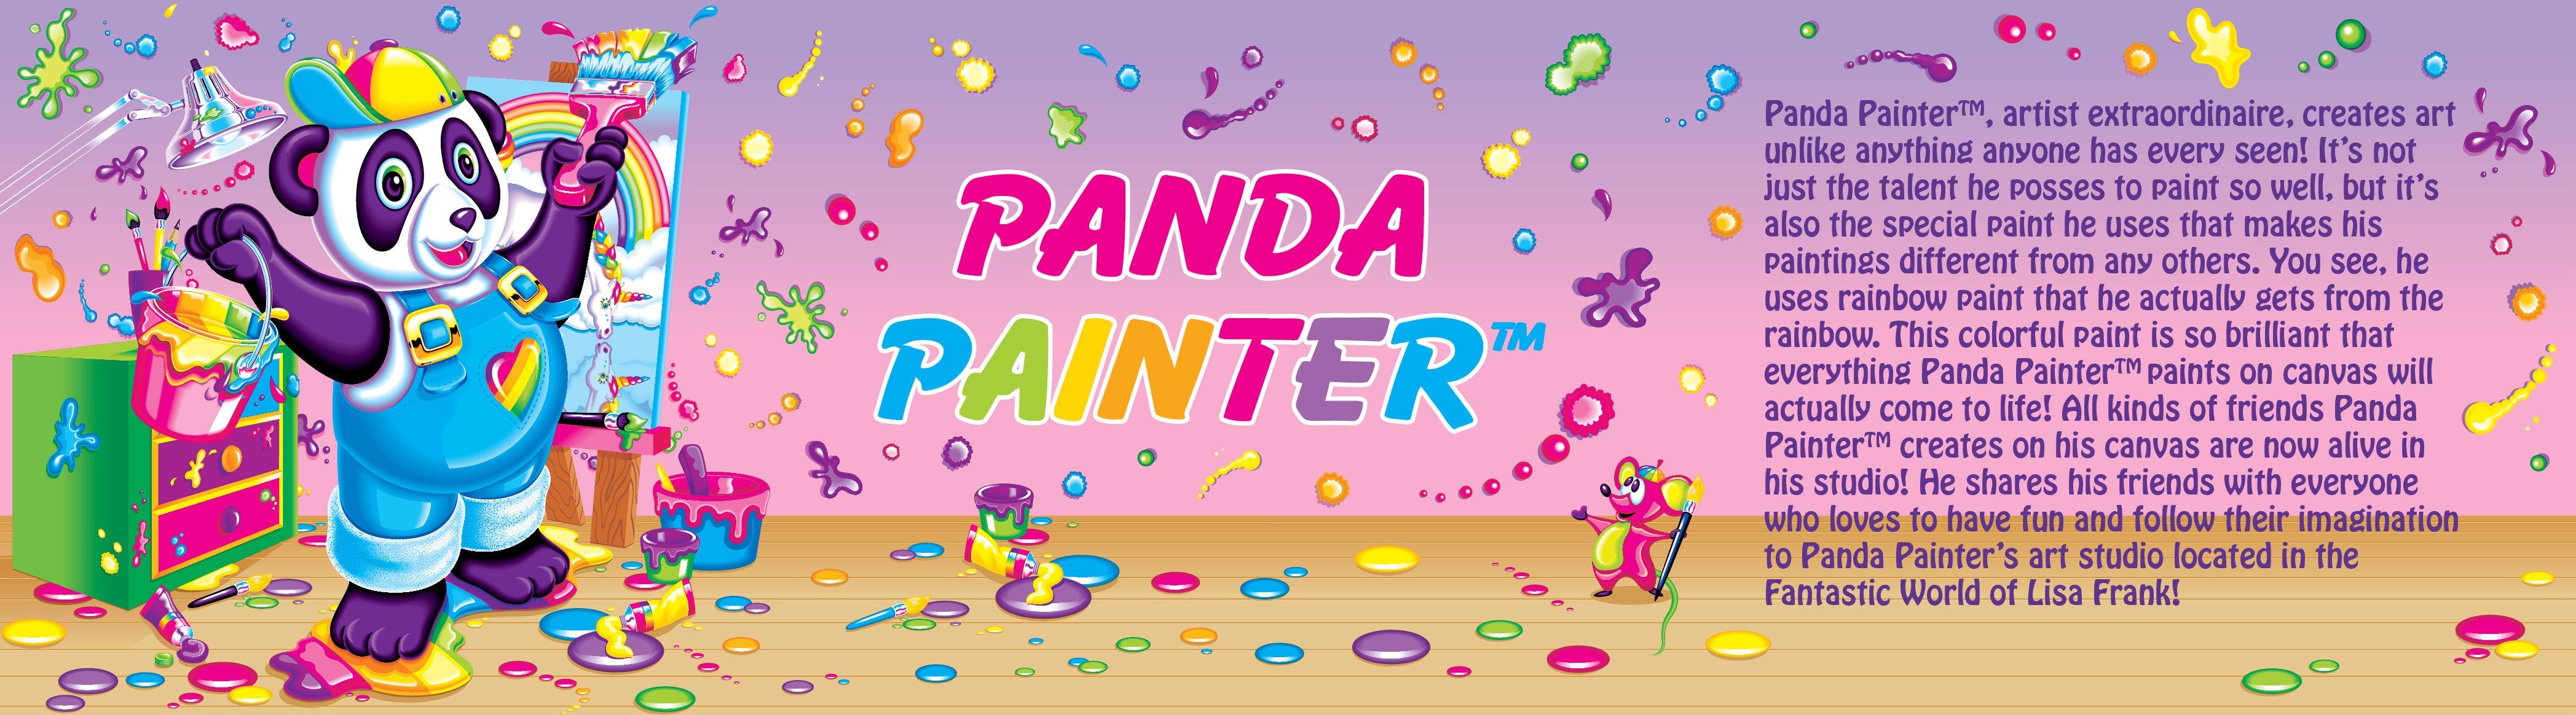 Panda Painter